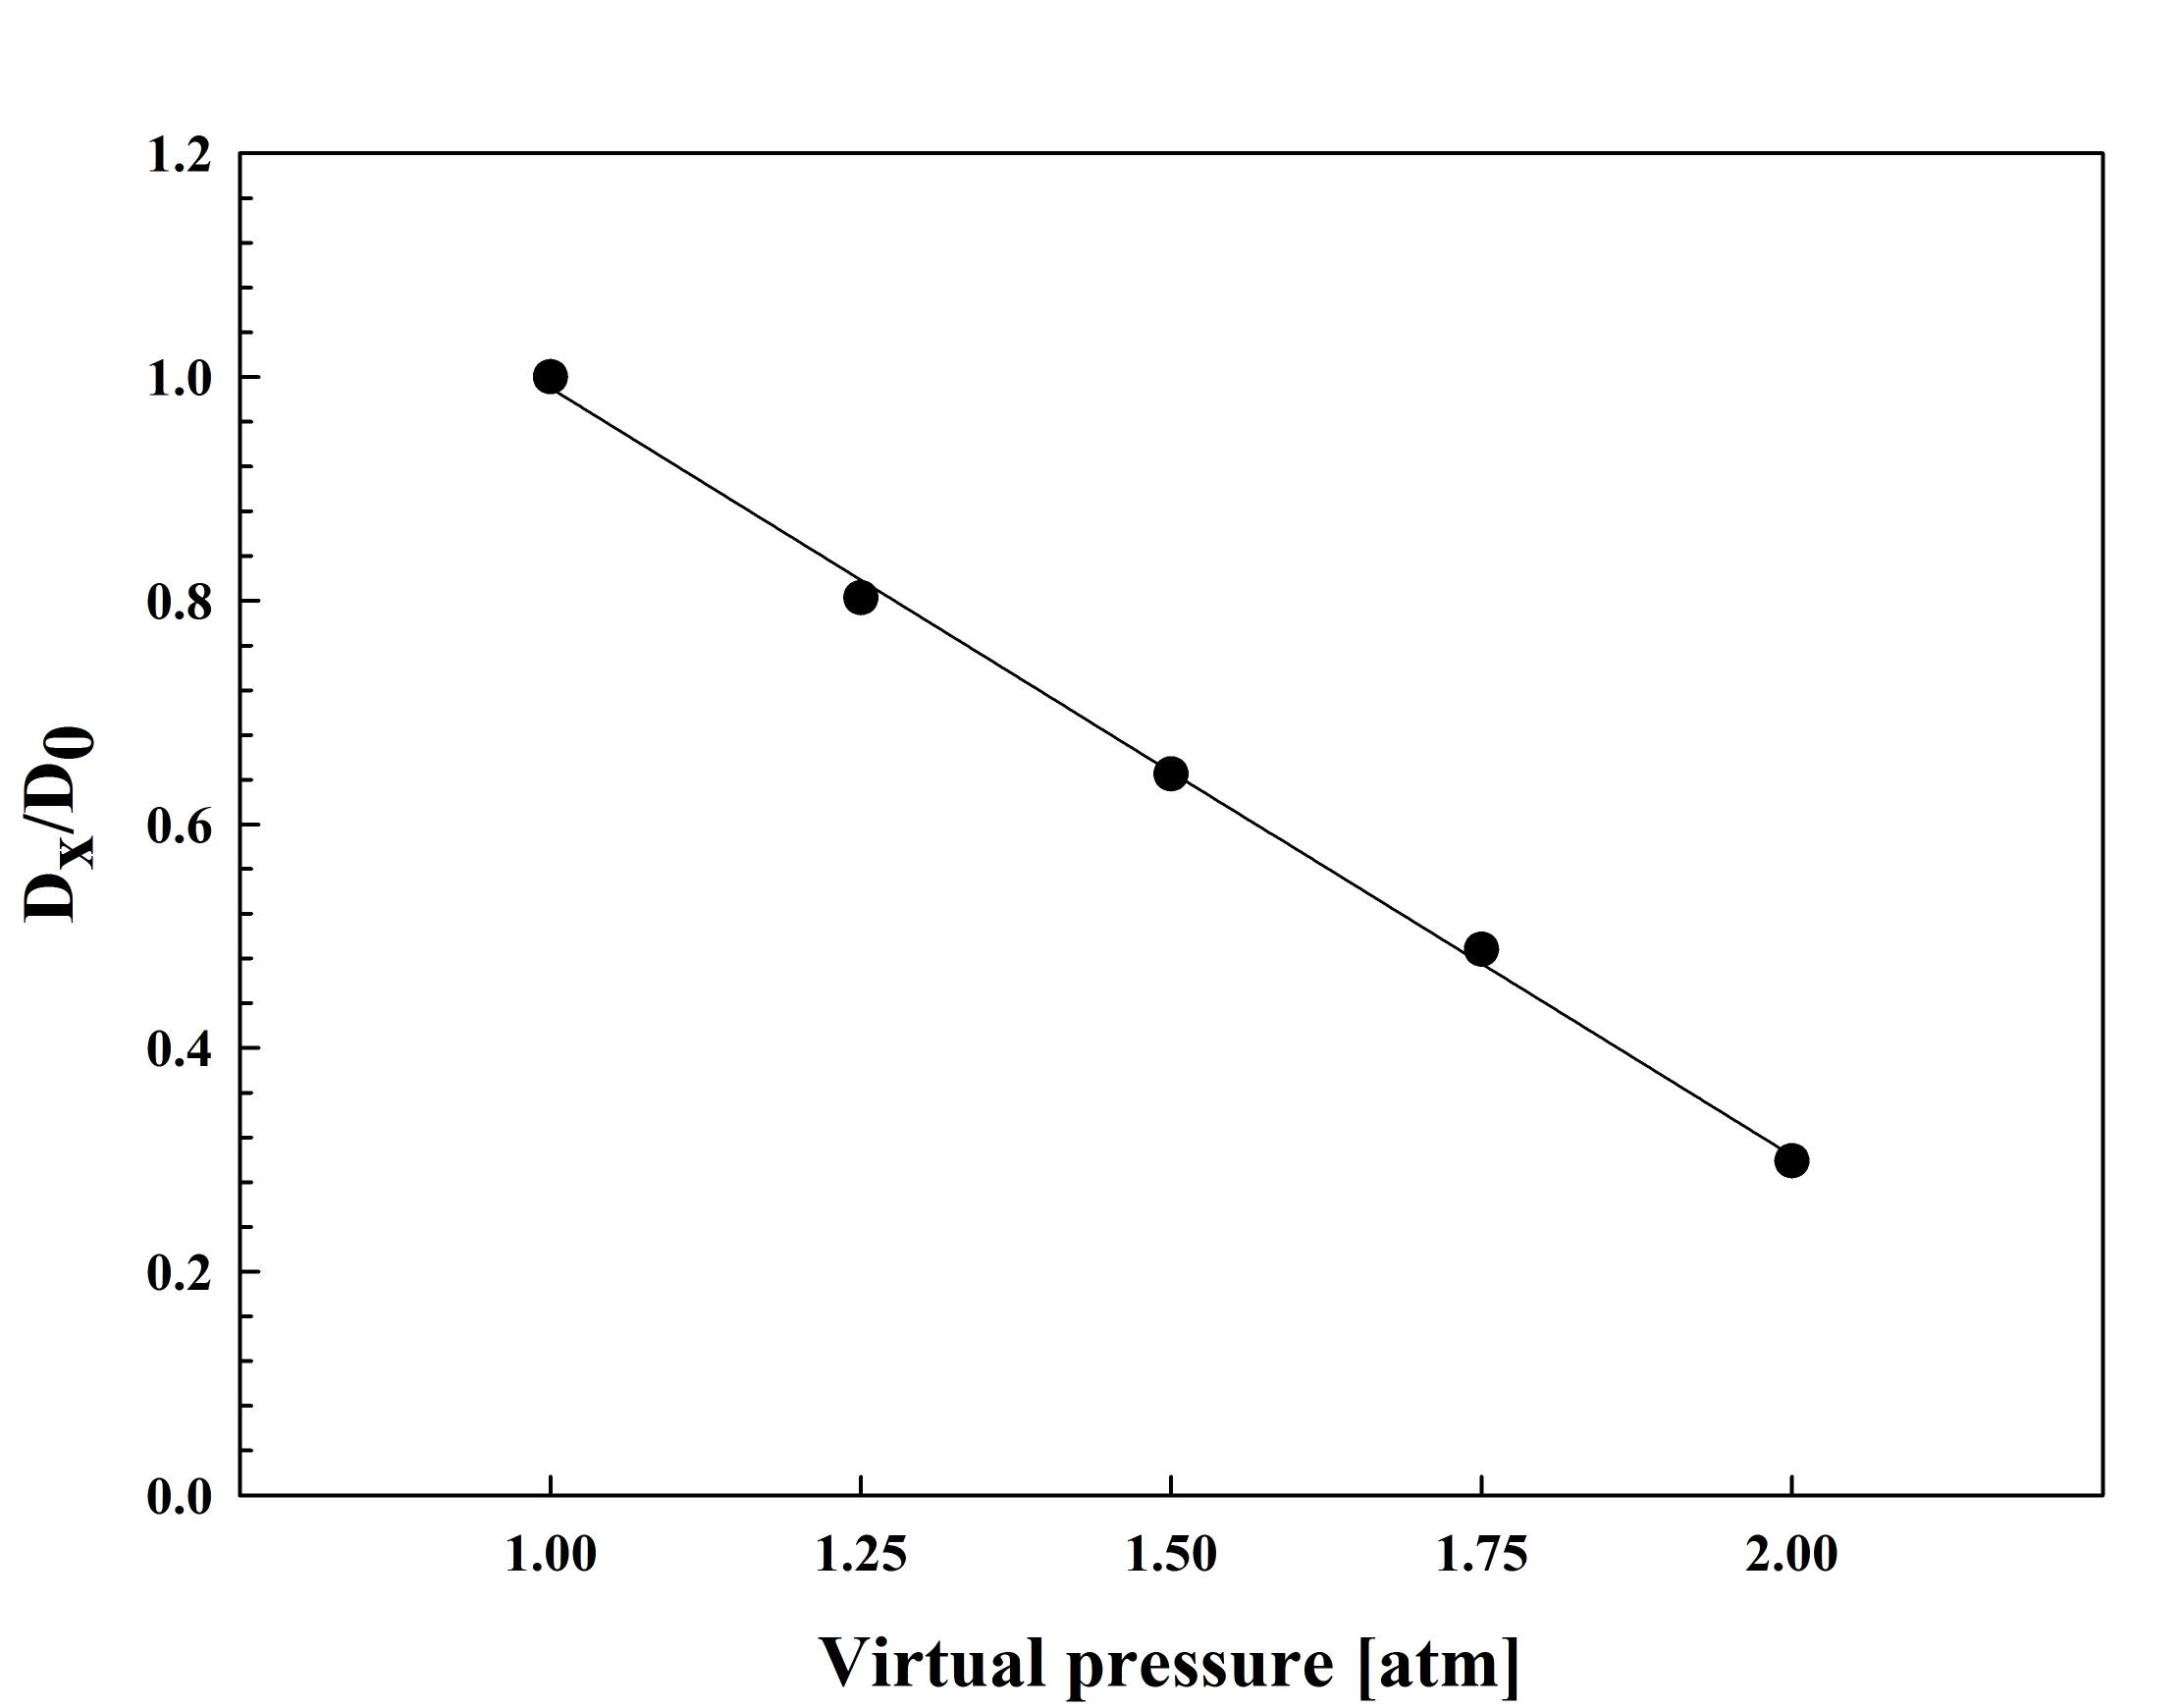 Decreasing rate of droplet size with increasing virtual pressure.